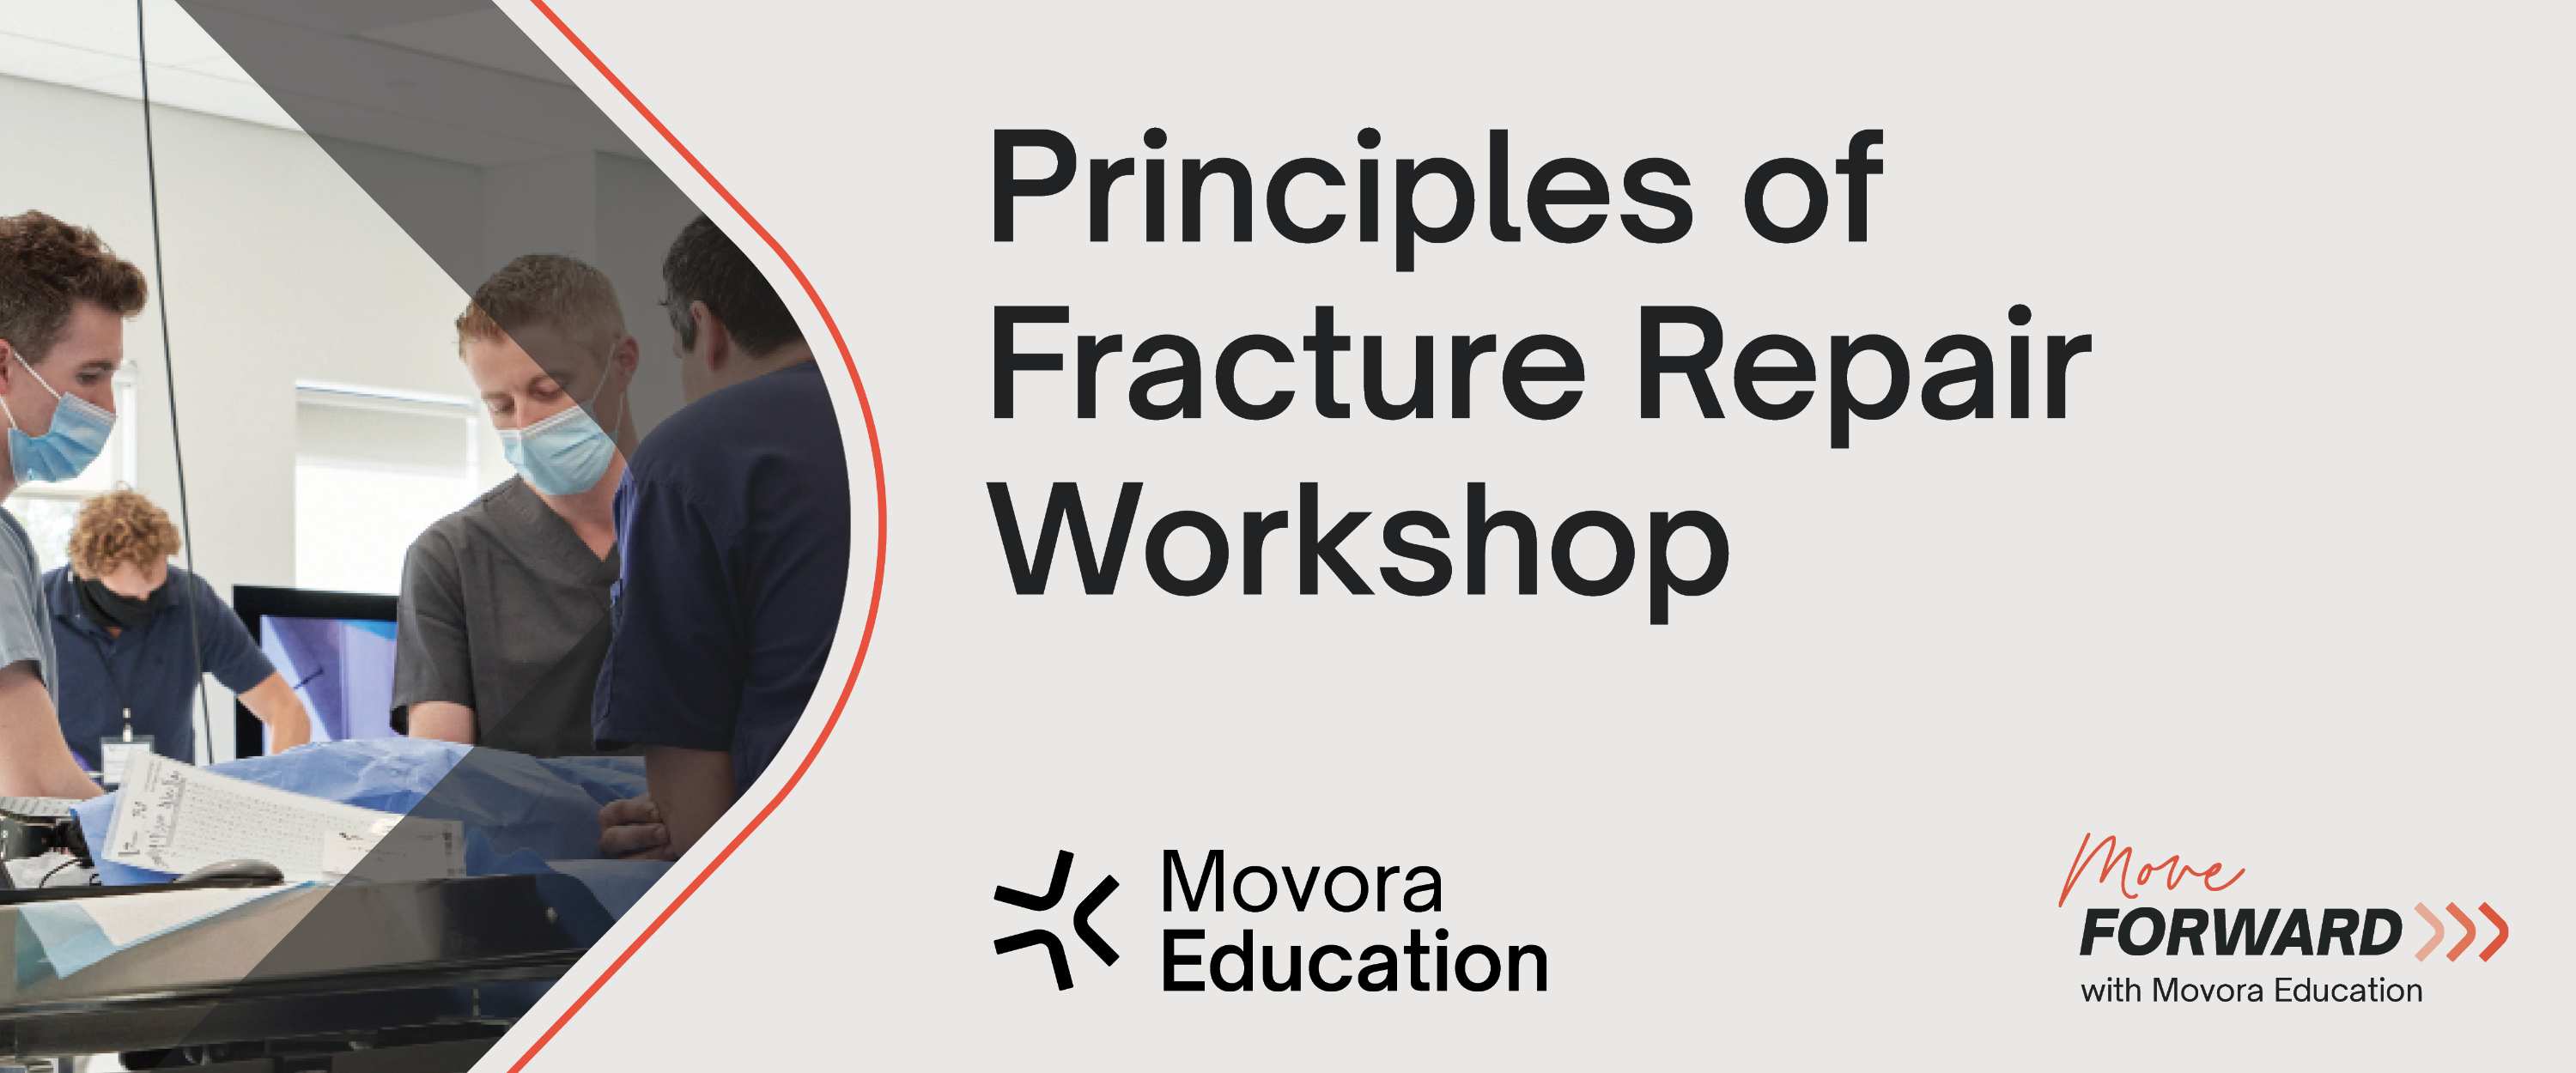 Movora Principles of Fracture Repair workshop